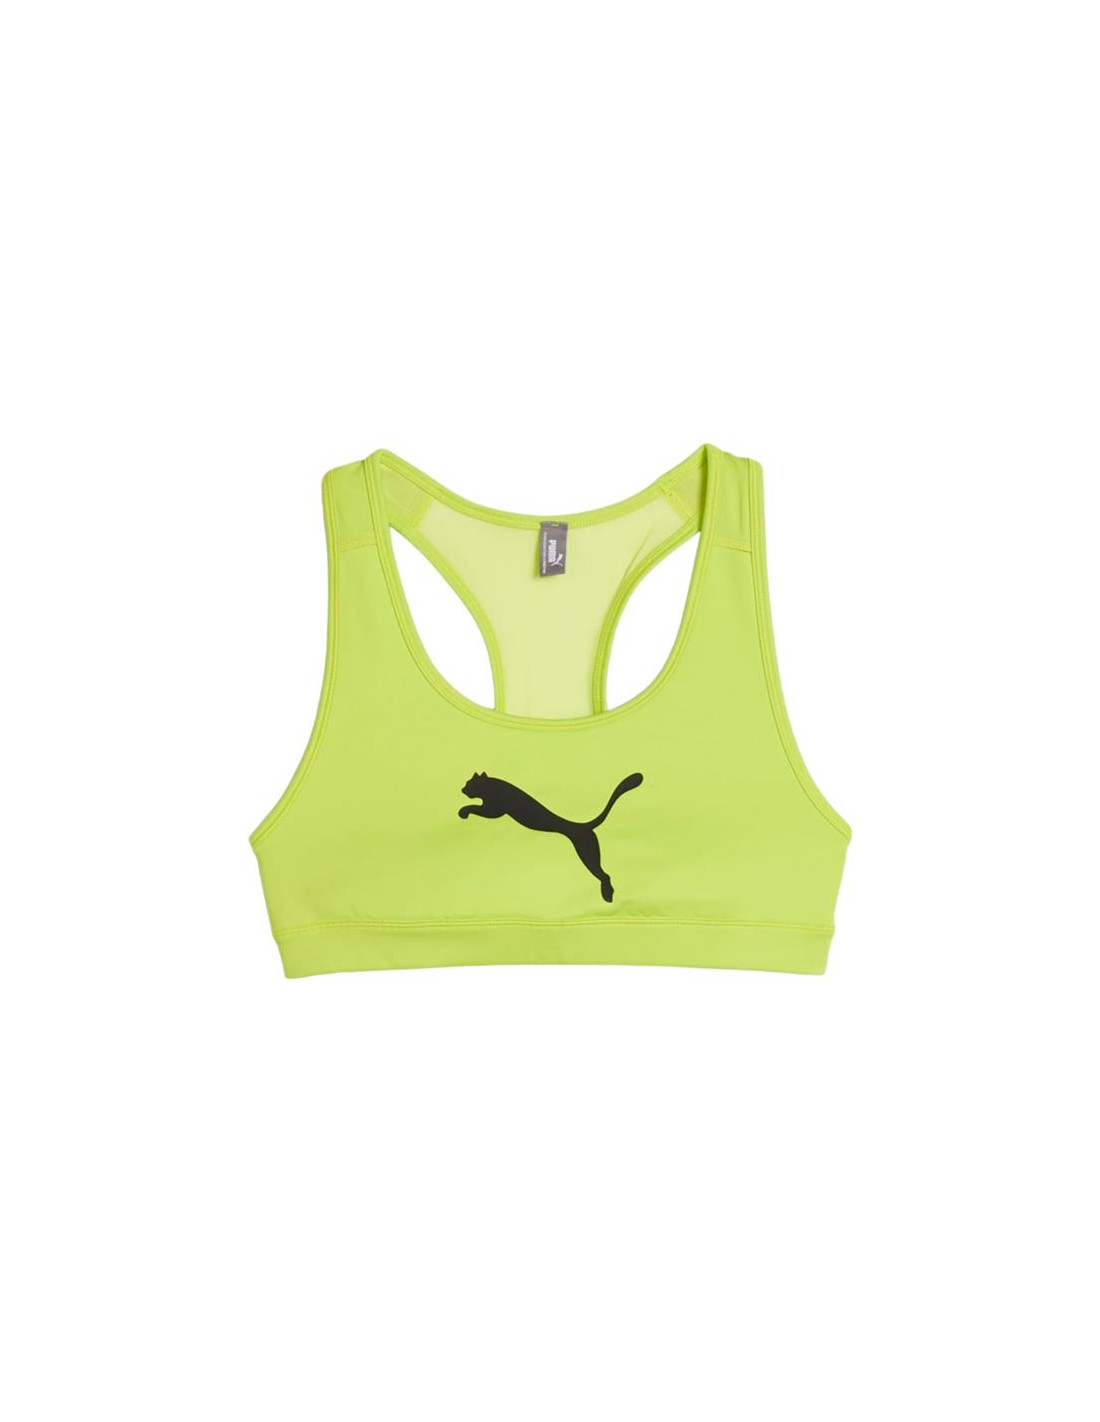 https://media.atmosferasport.es/349733-thickbox_default/brassiere-de-sport-de-fitness-puma-4-keeps-femme-jaune-noir.jpg